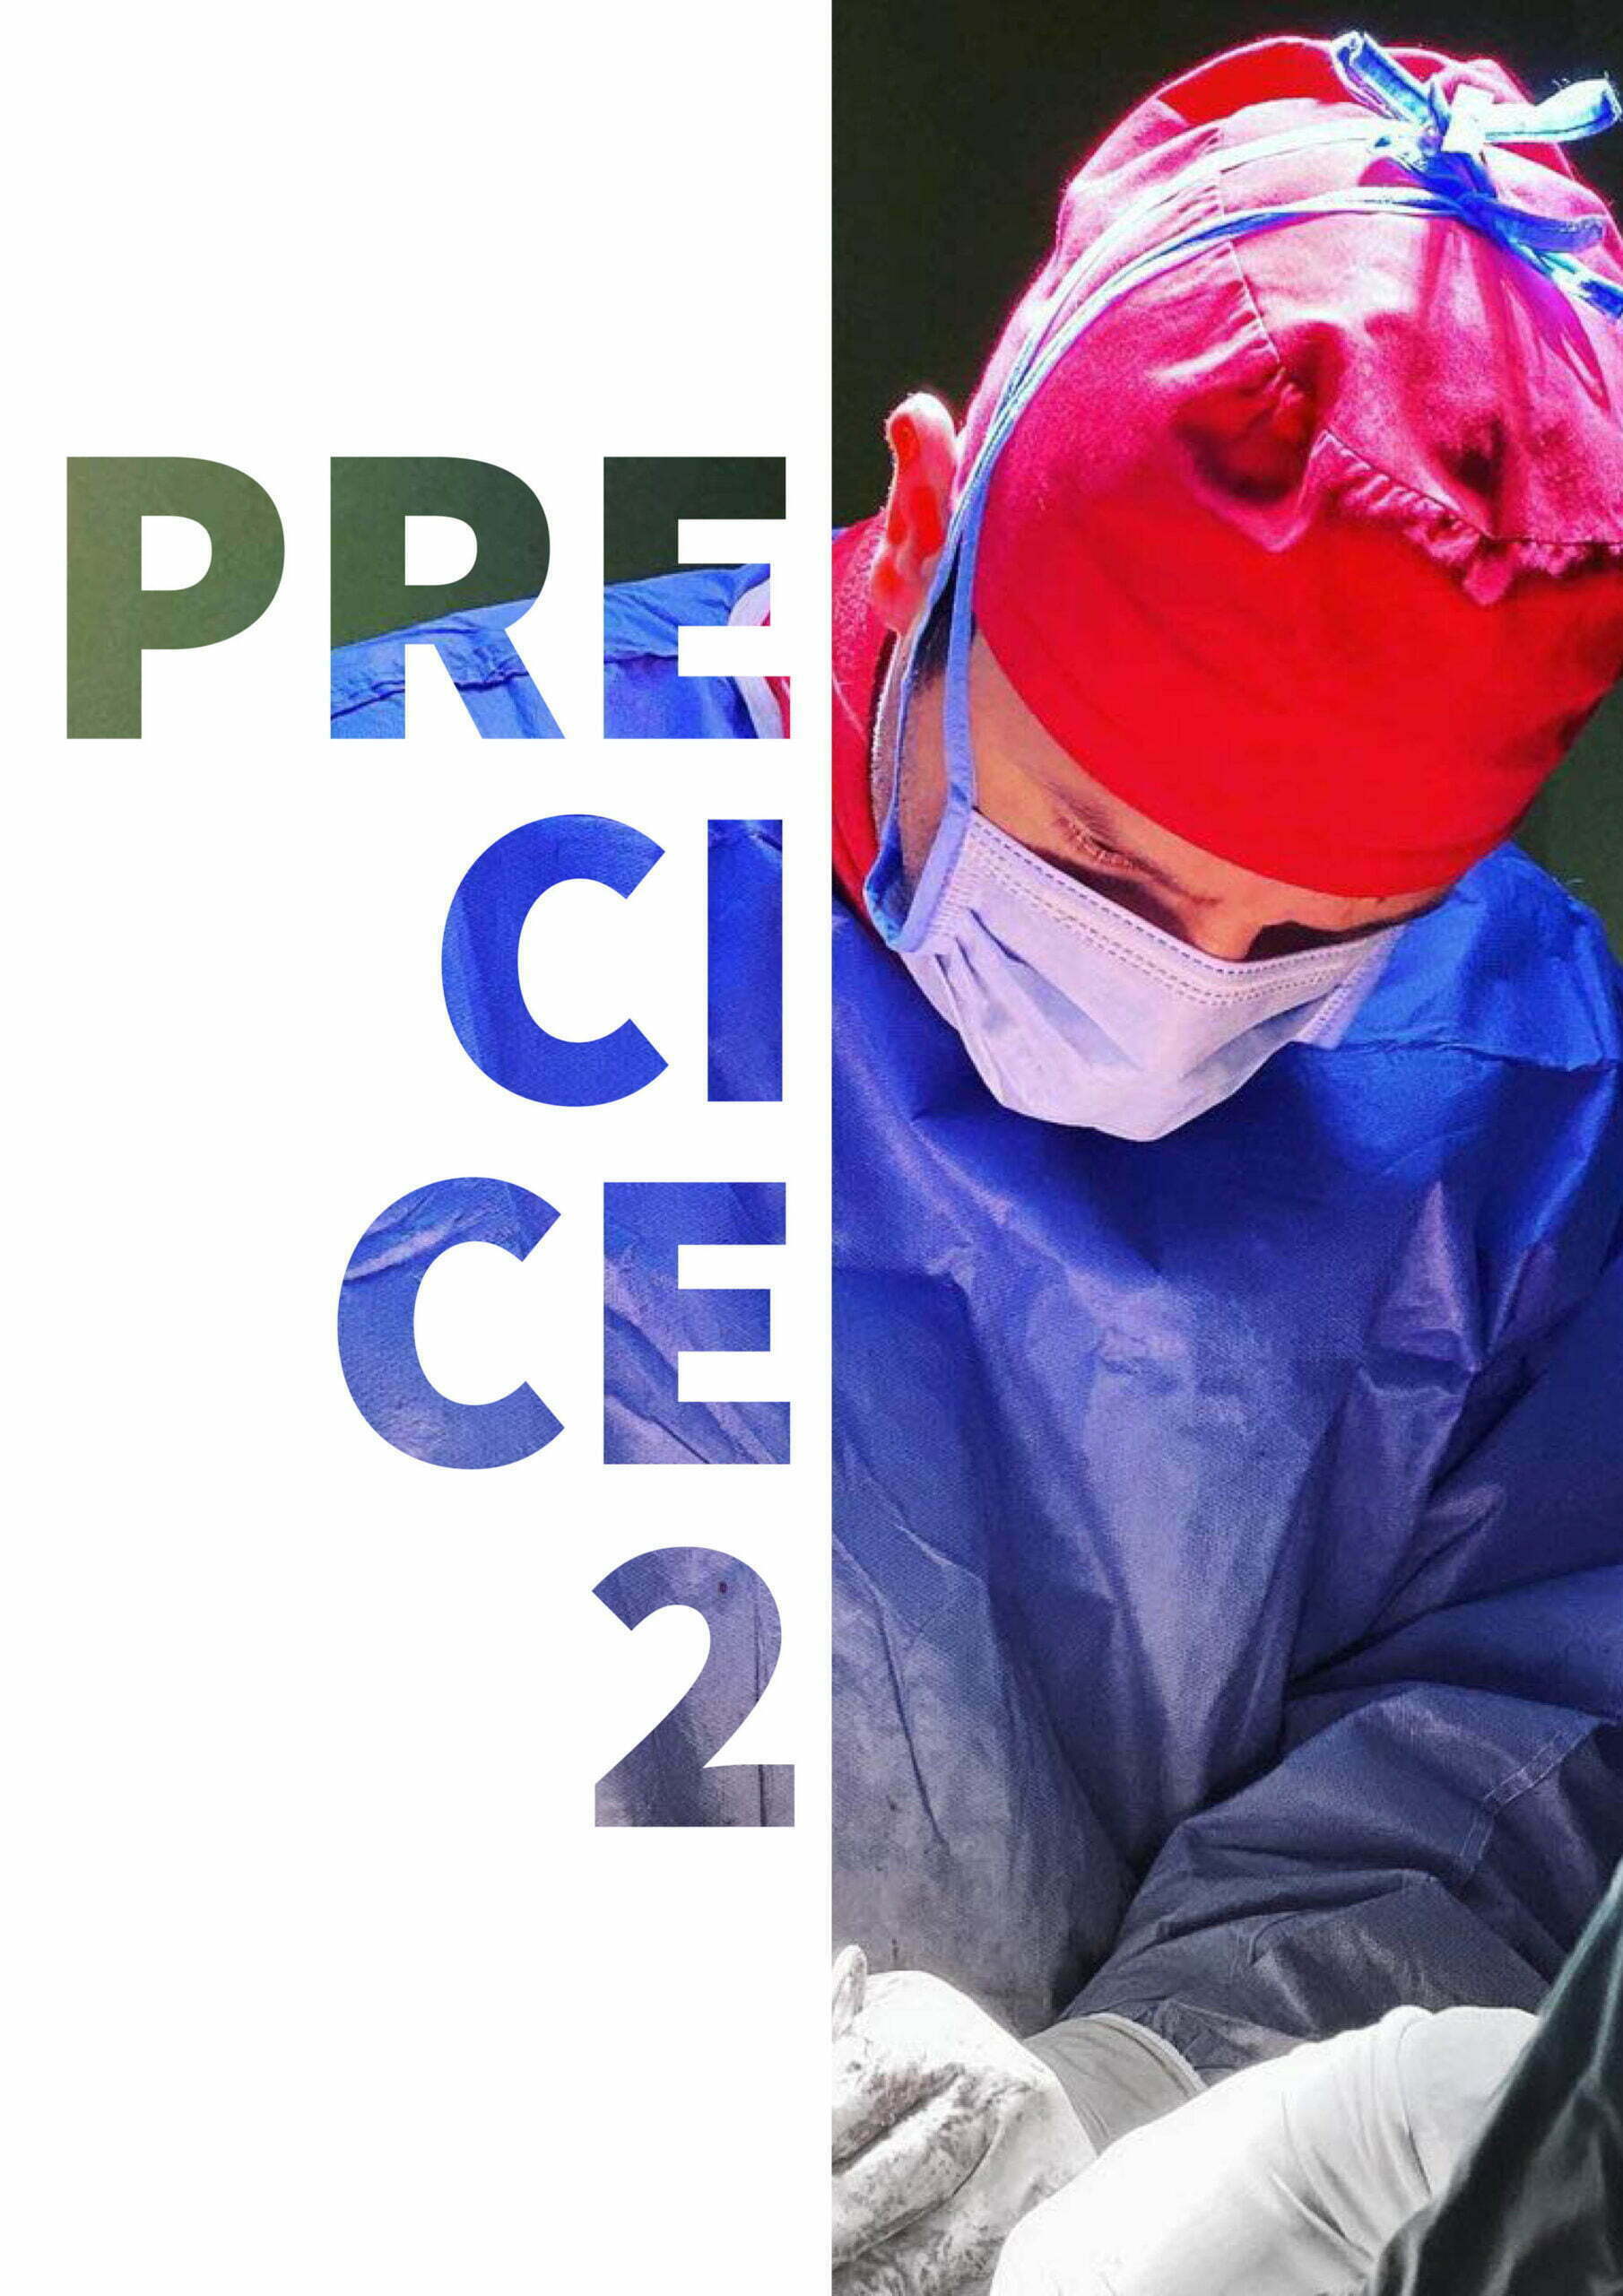 PRECICE 2 method surgeon in limb lengthening surgery